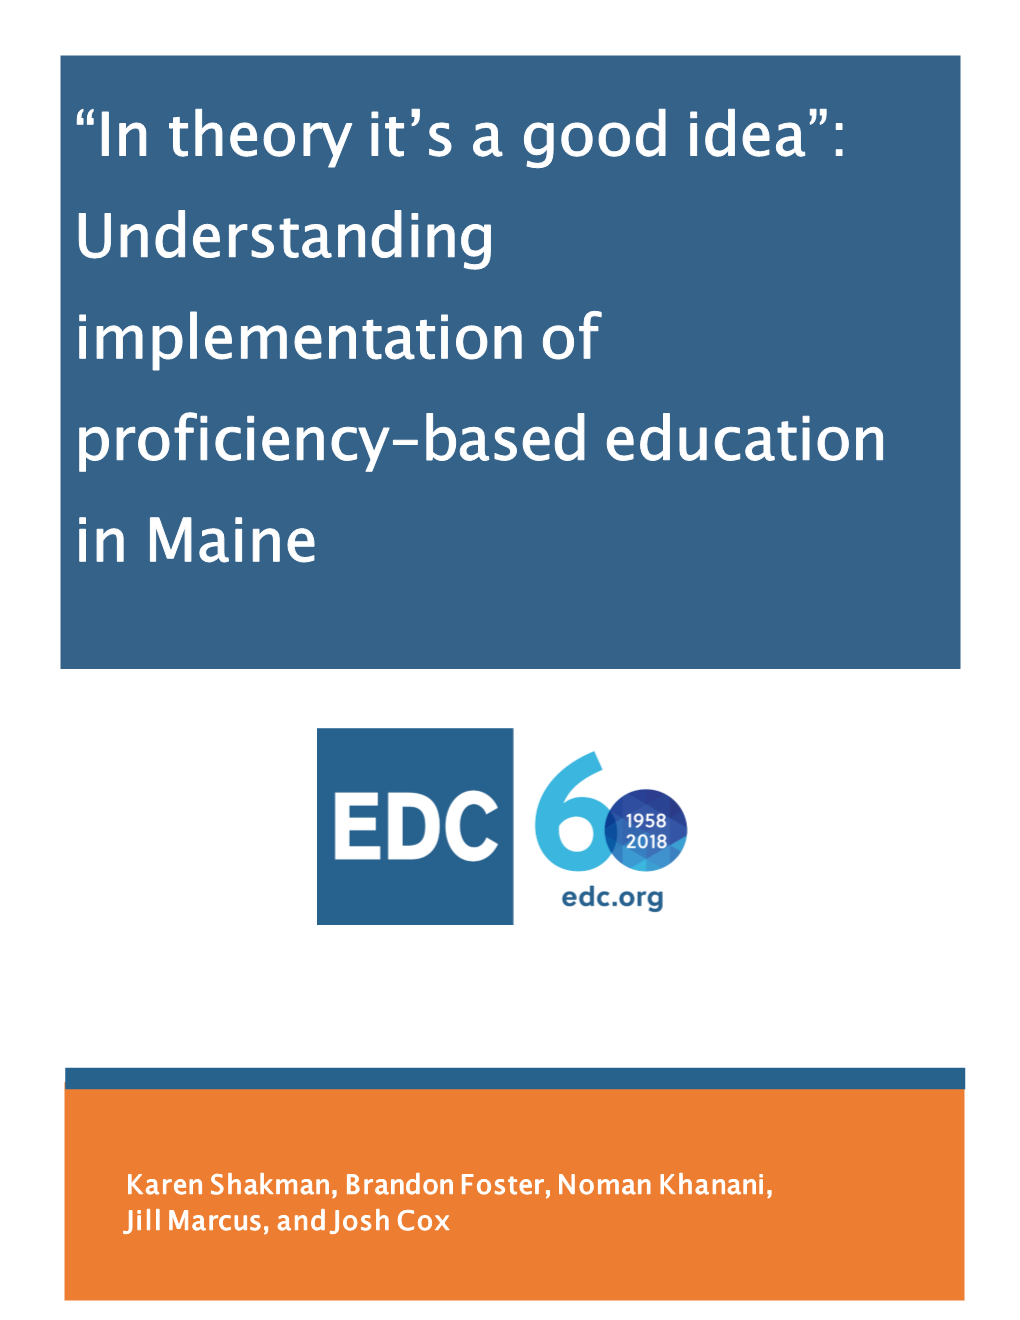 Understanding Implementation of Proficiency-Based Education in Maine